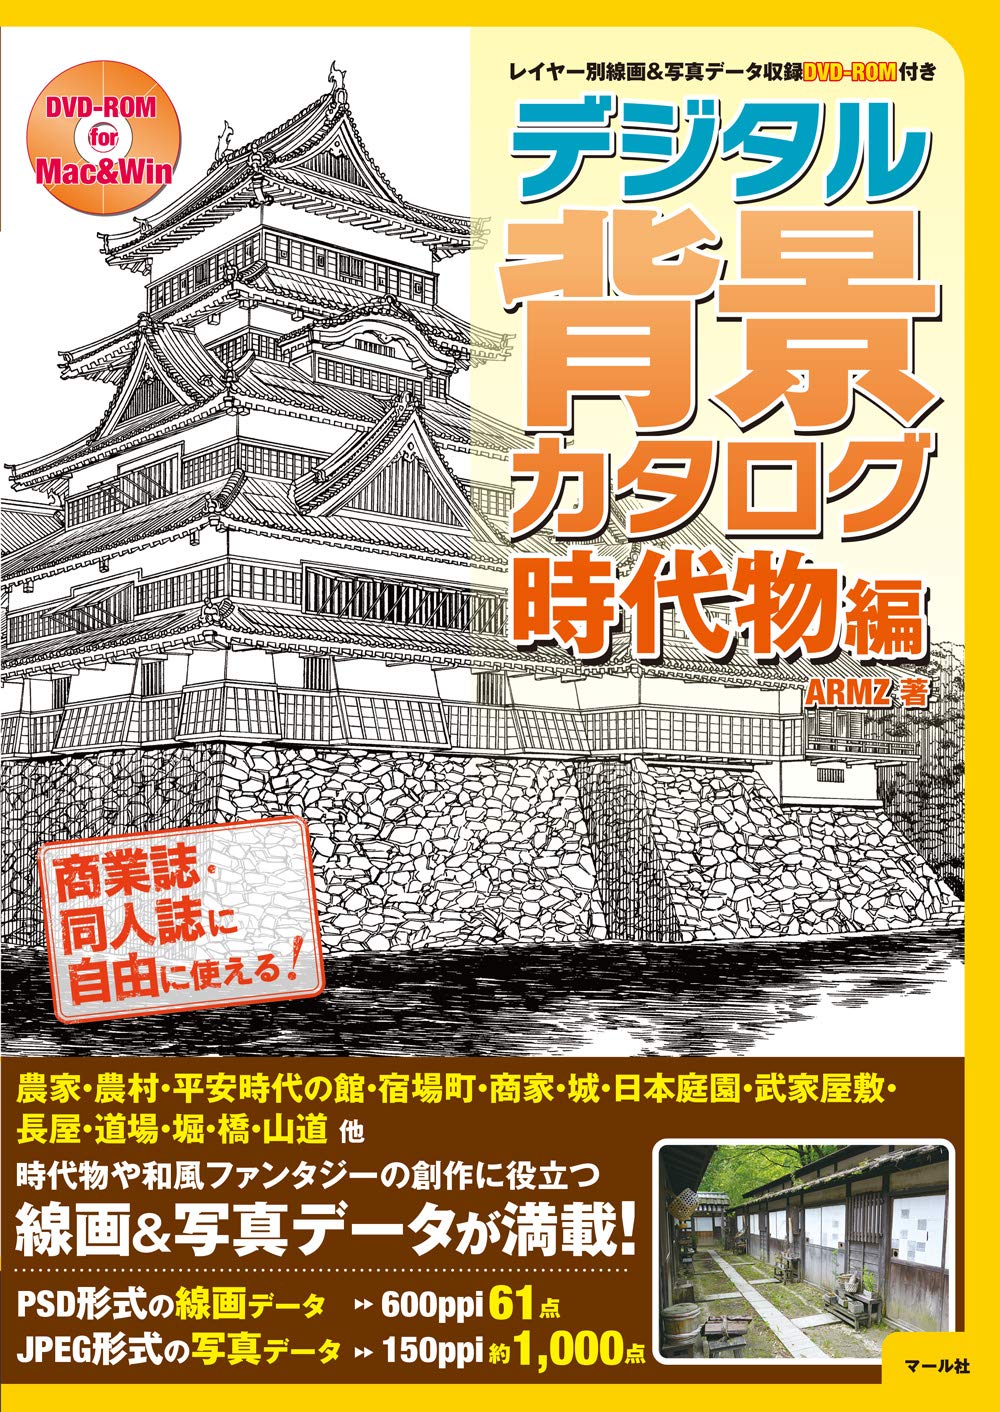 Digital Background Catalog "samurai drama" w/DVD-ROM